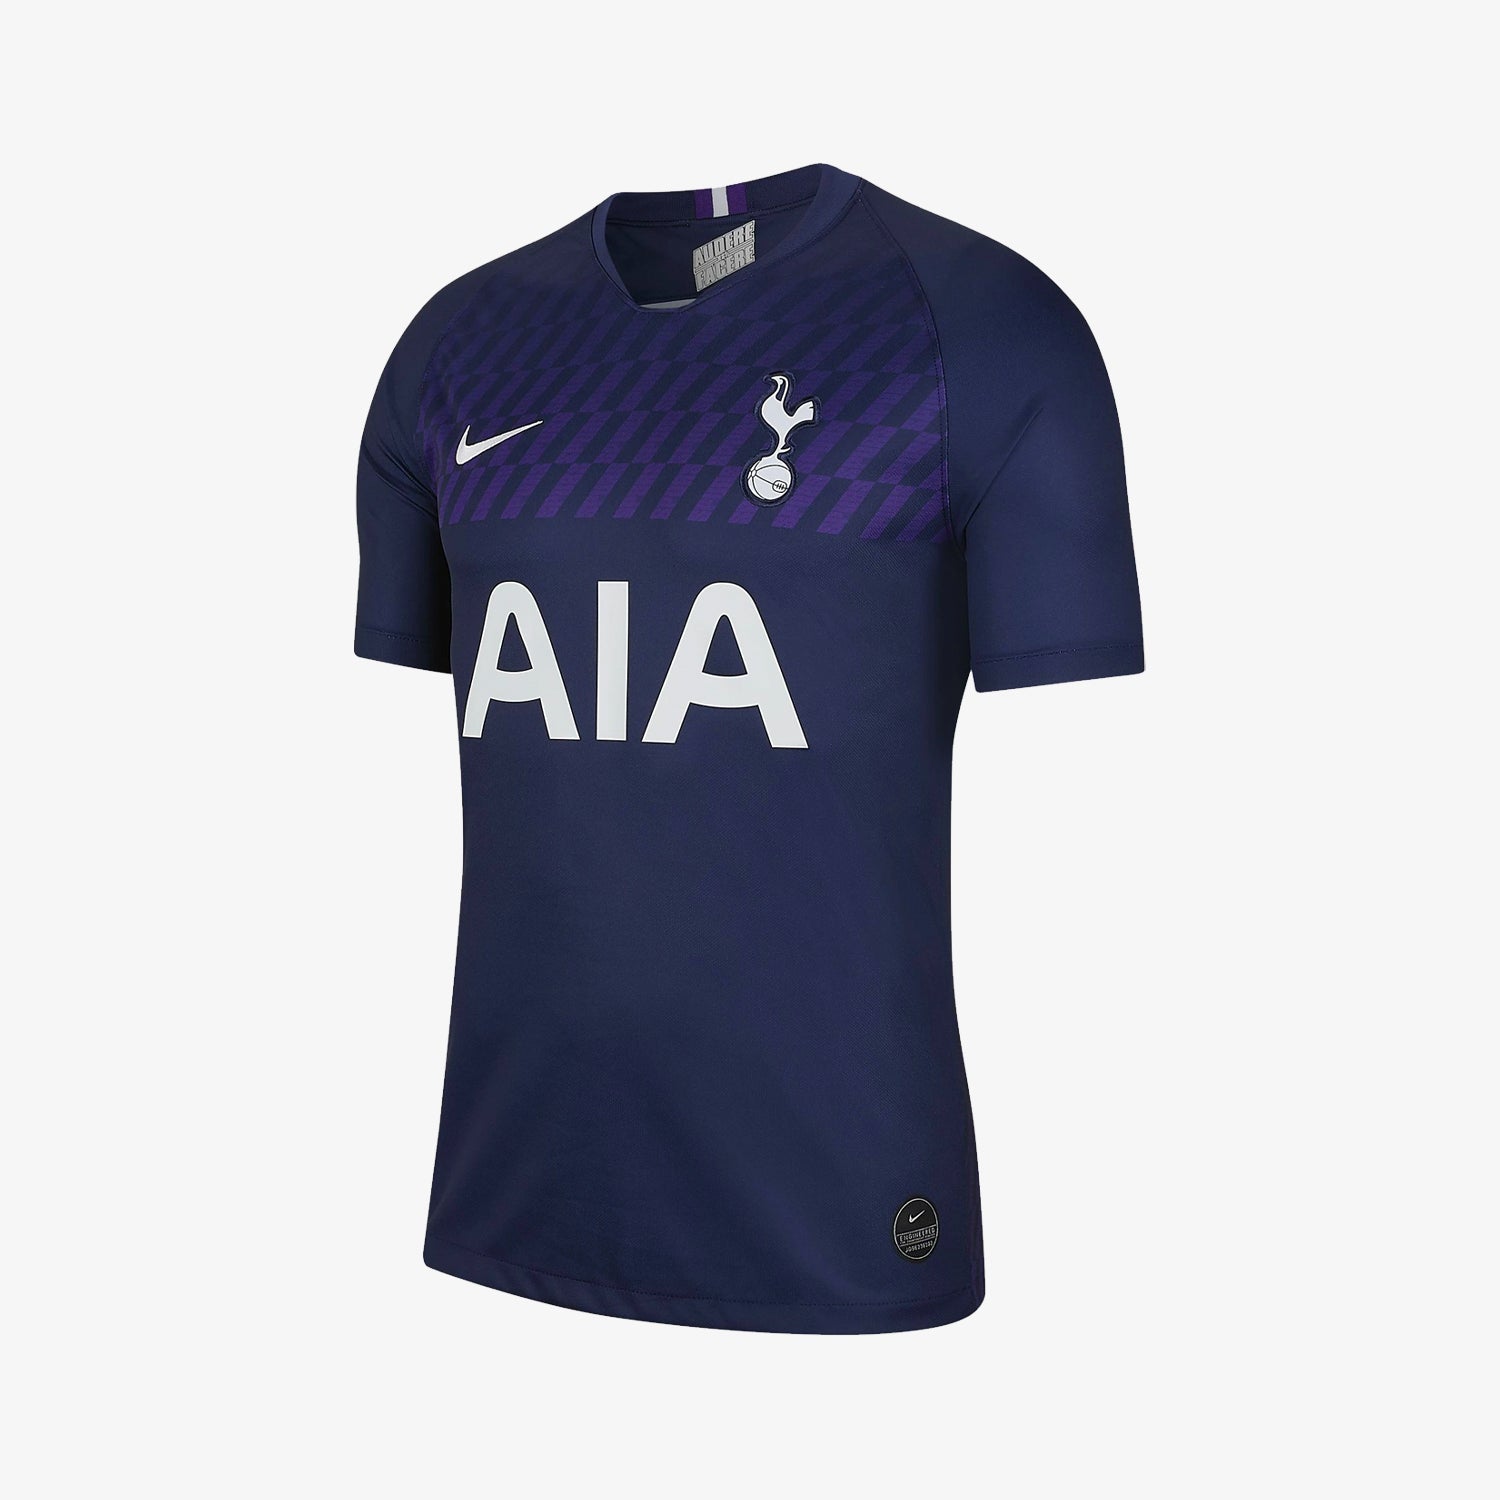 Tottenham home and away kits 2019/20: Nike release shirts for